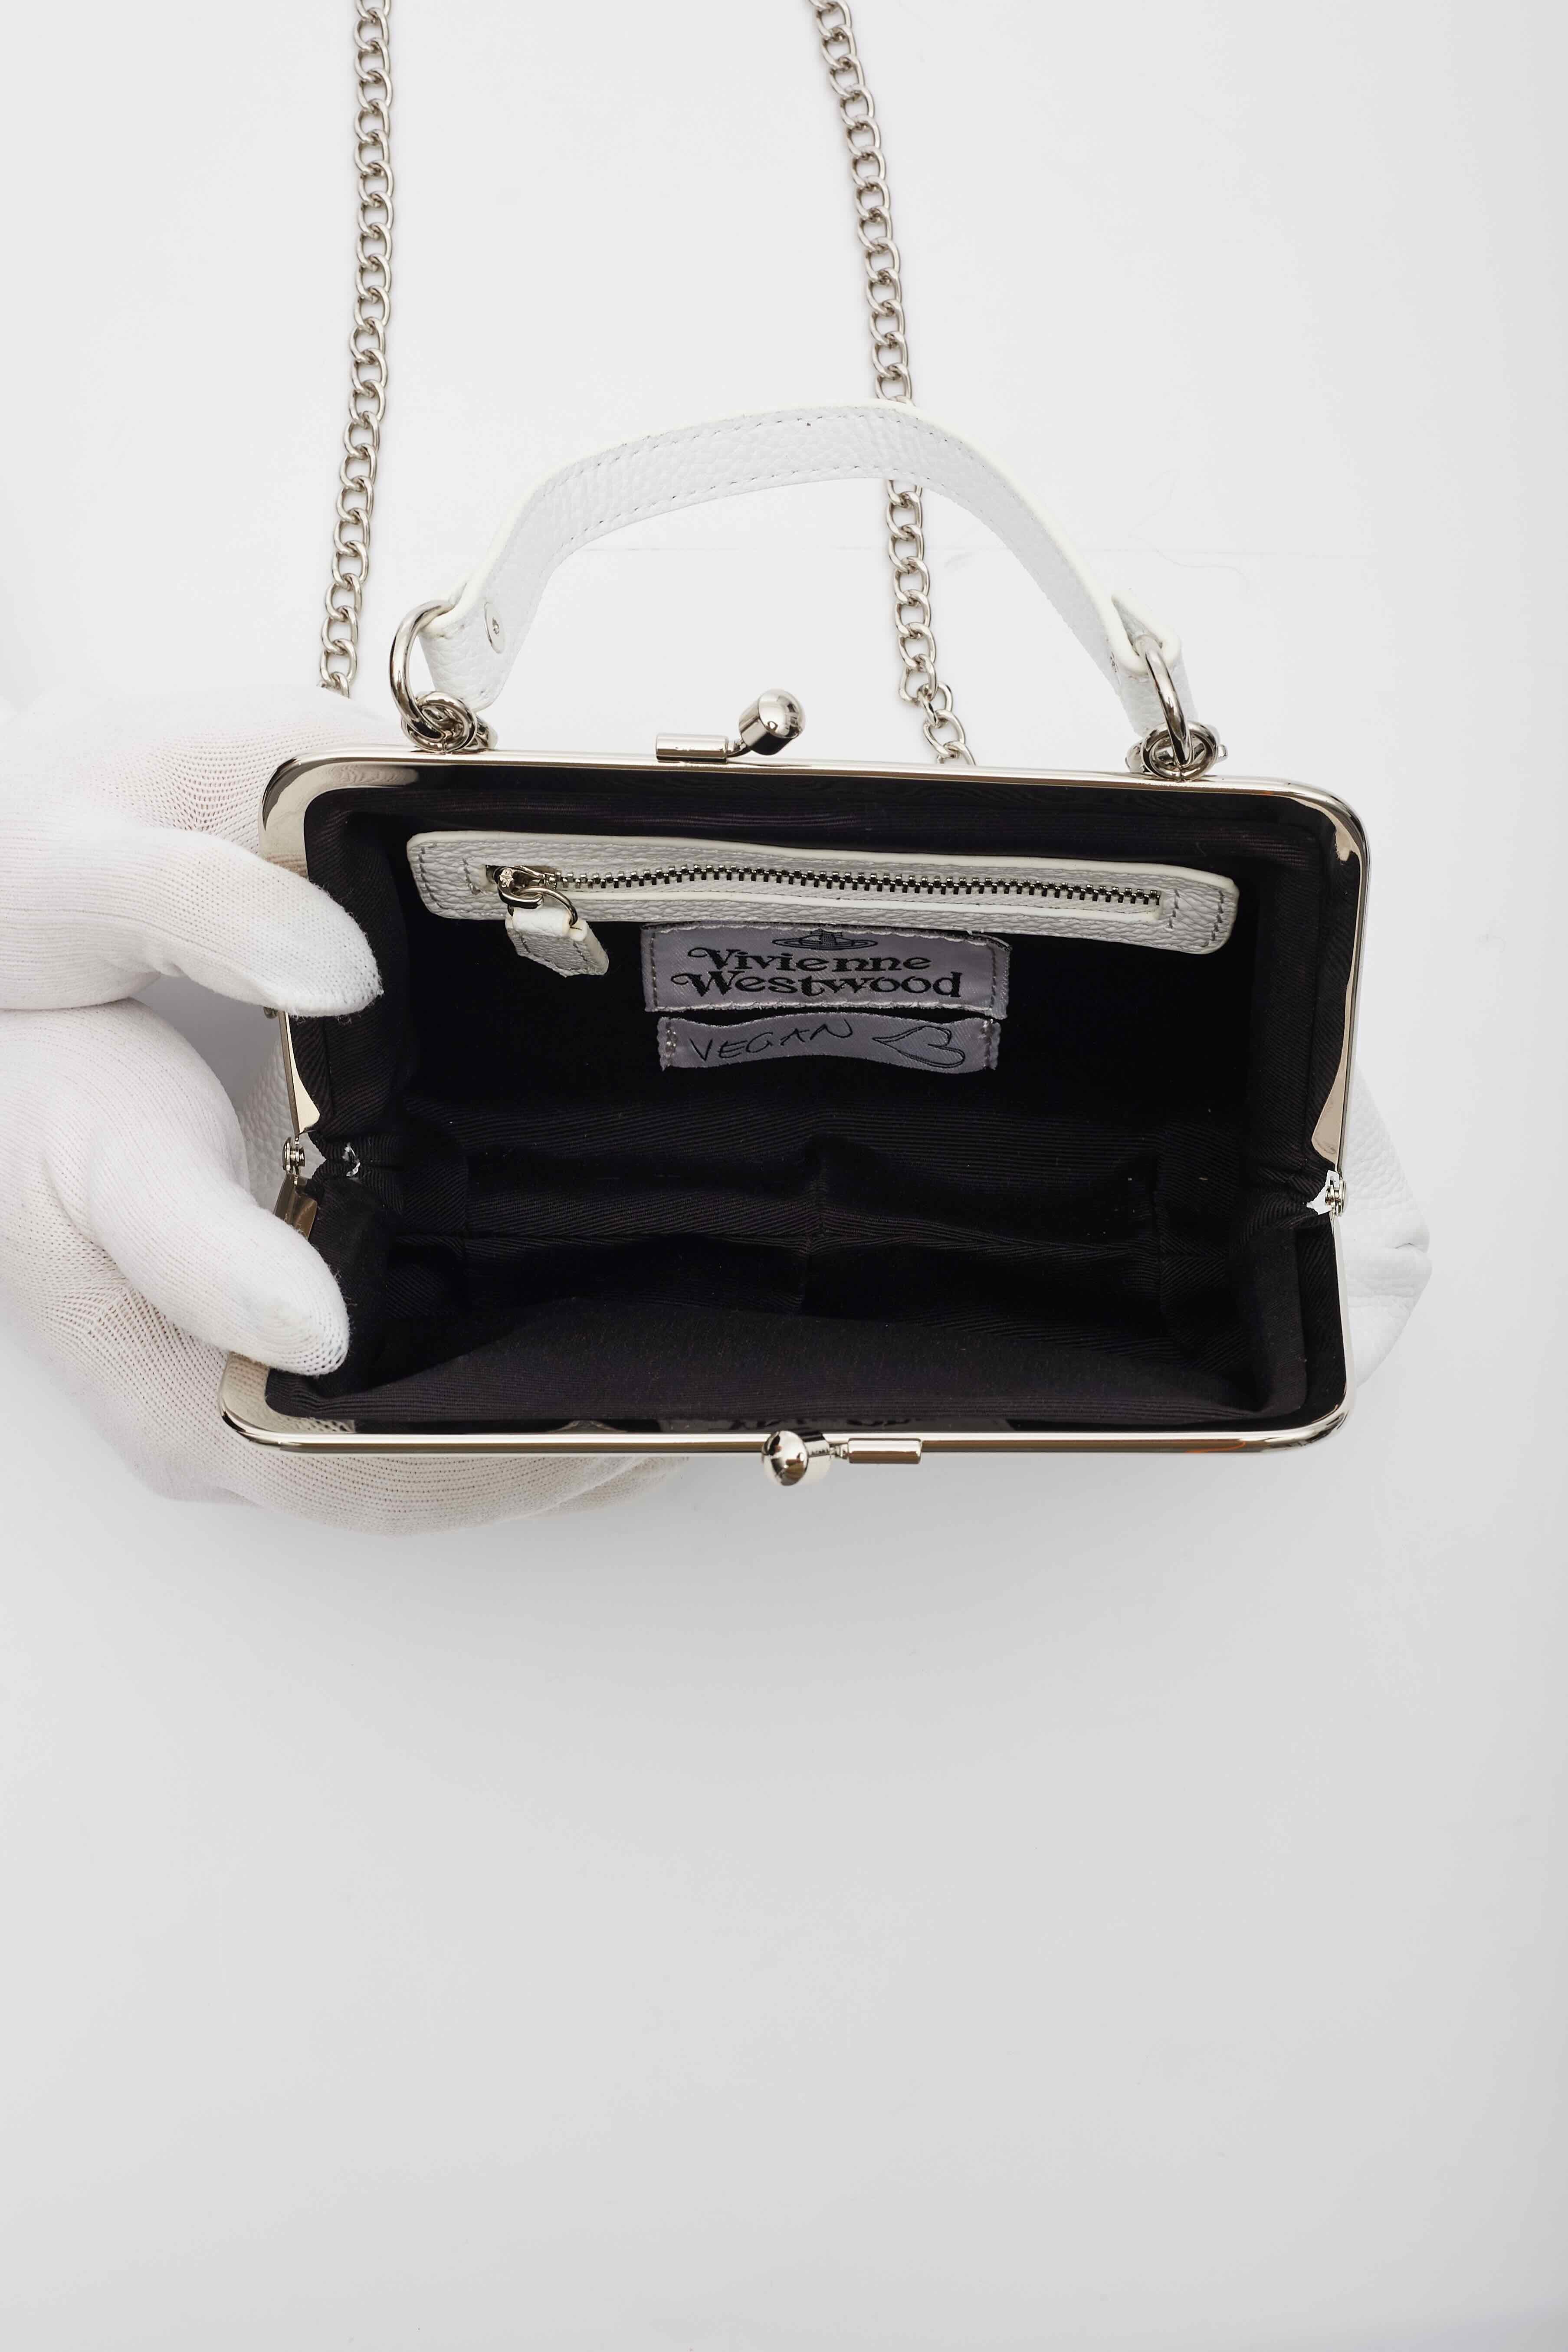 Vivienne Westwood White Leather Granny Frame Bag For Sale 1